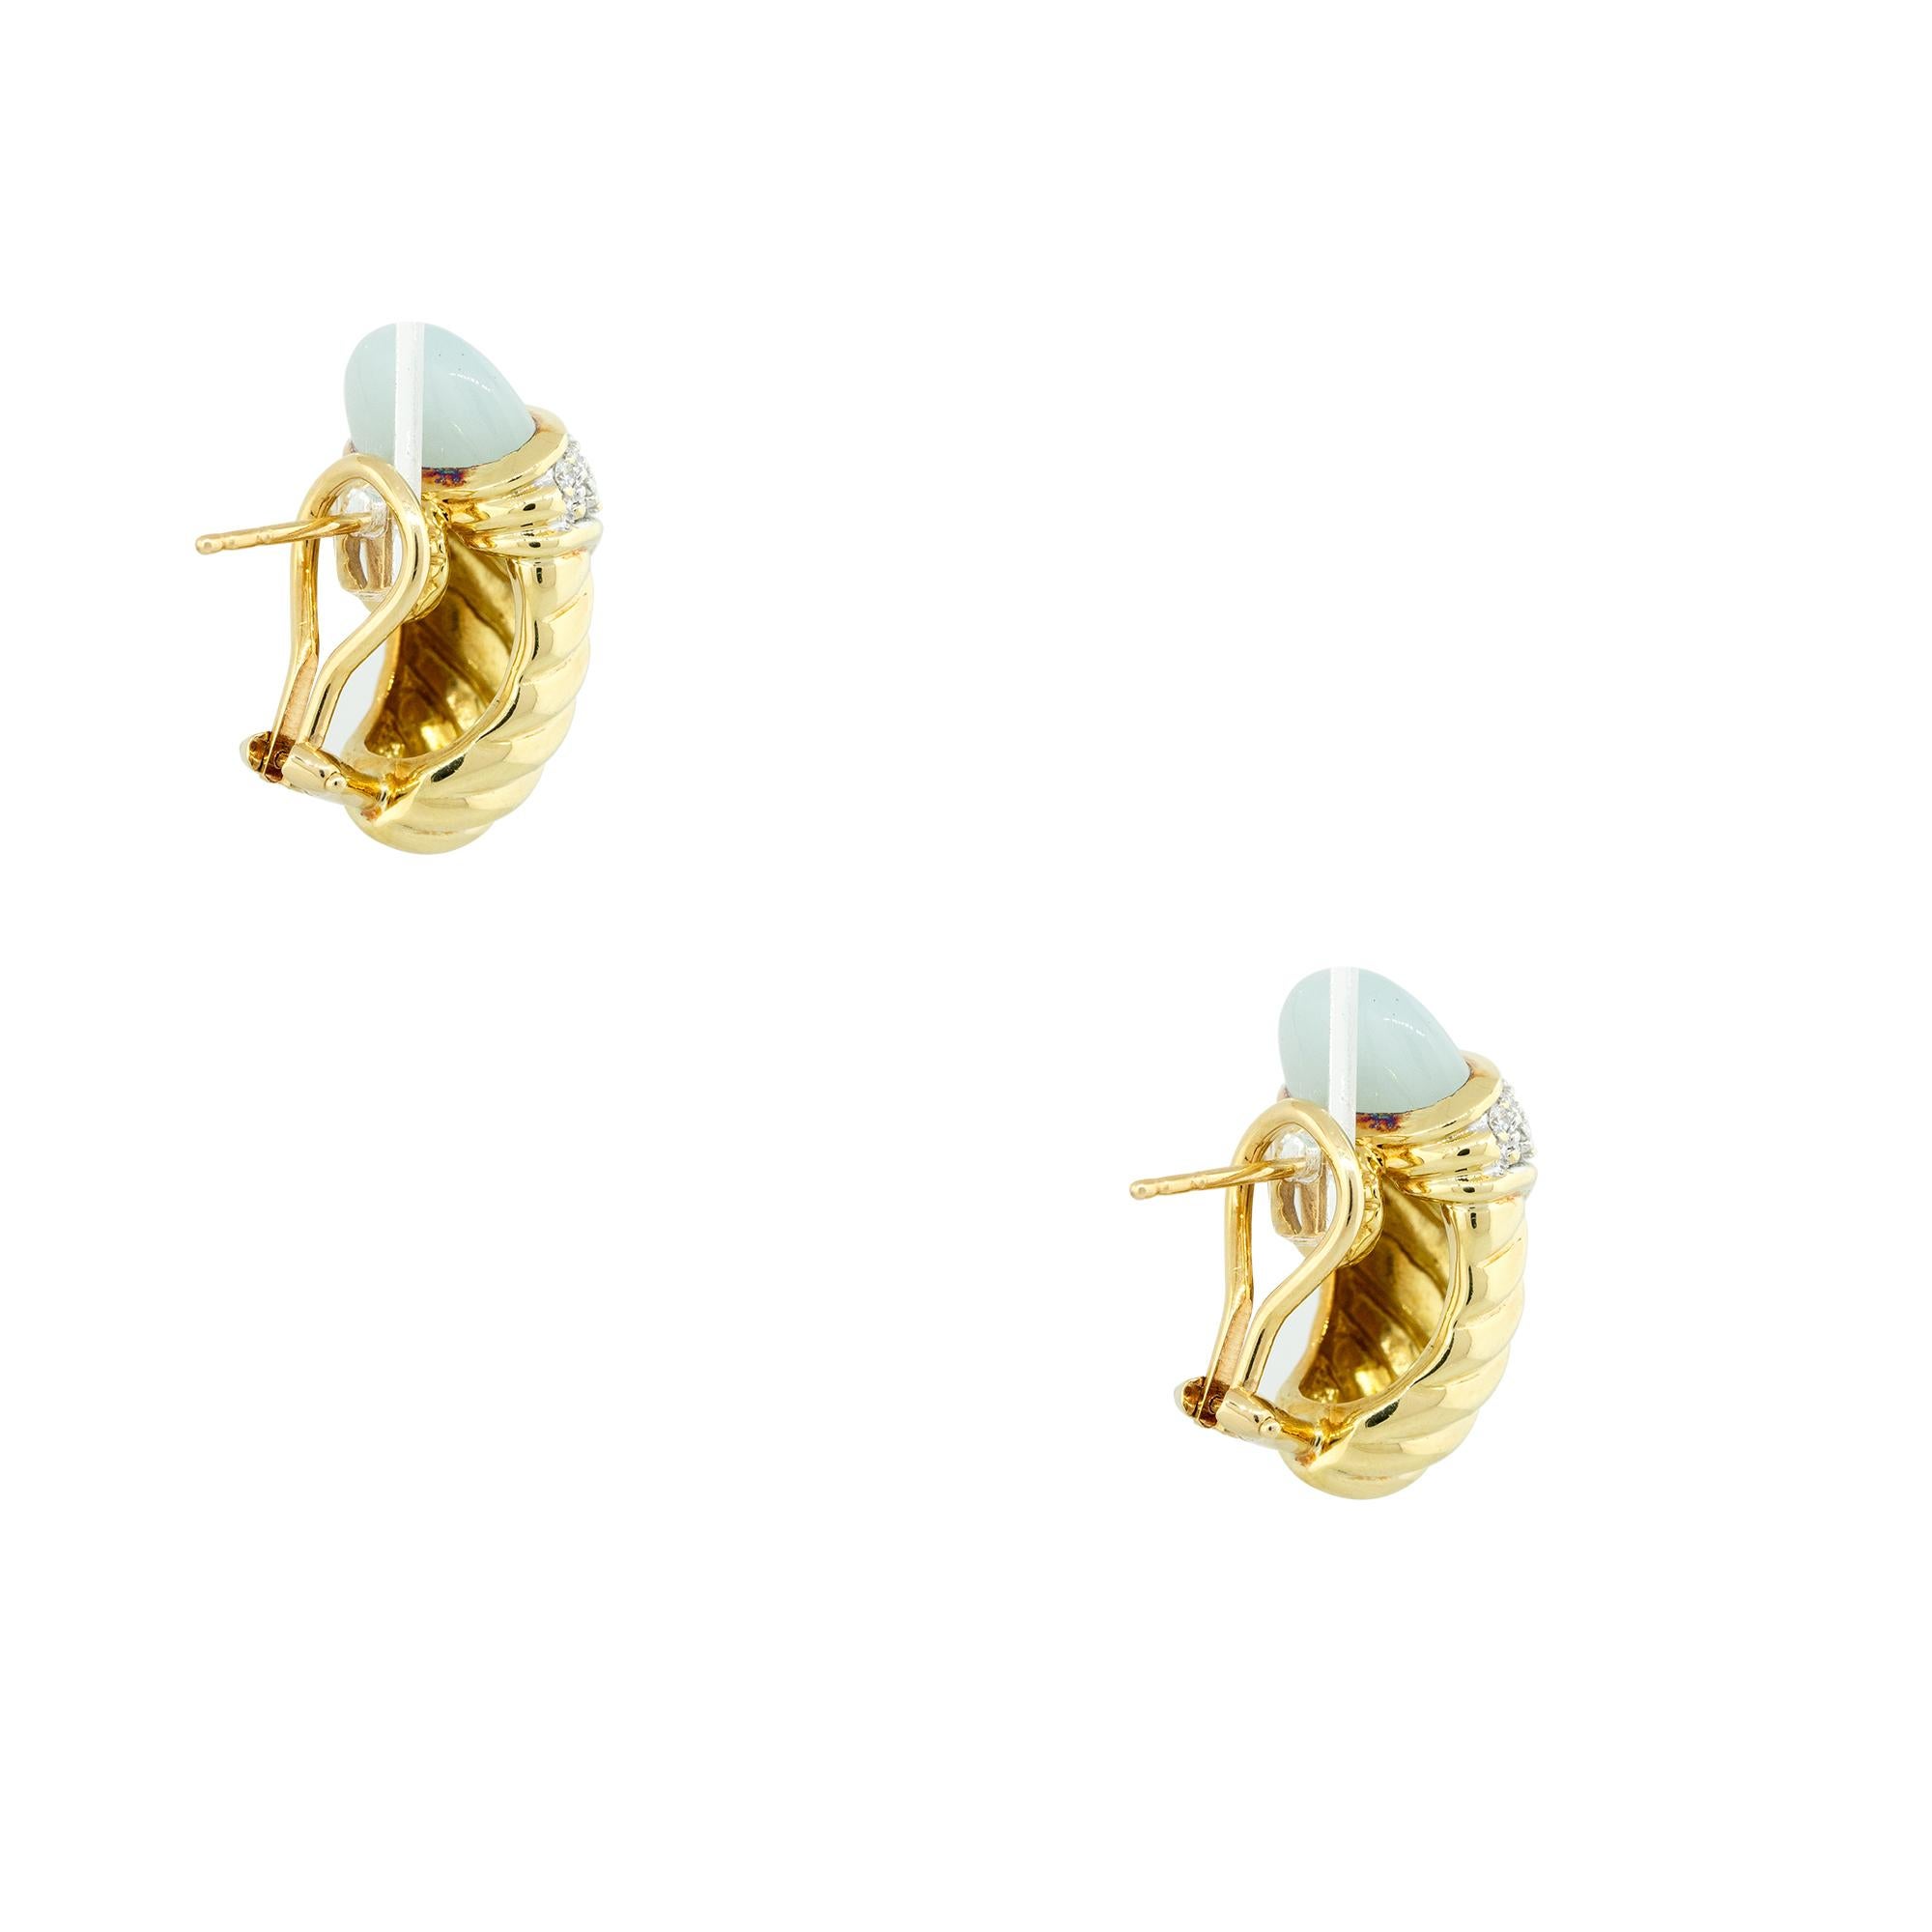 David Yurman 0.45 Carat Pave Diamond & Chalcedony Earrings 18 Karat In Stock In Excellent Condition For Sale In Boca Raton, FL